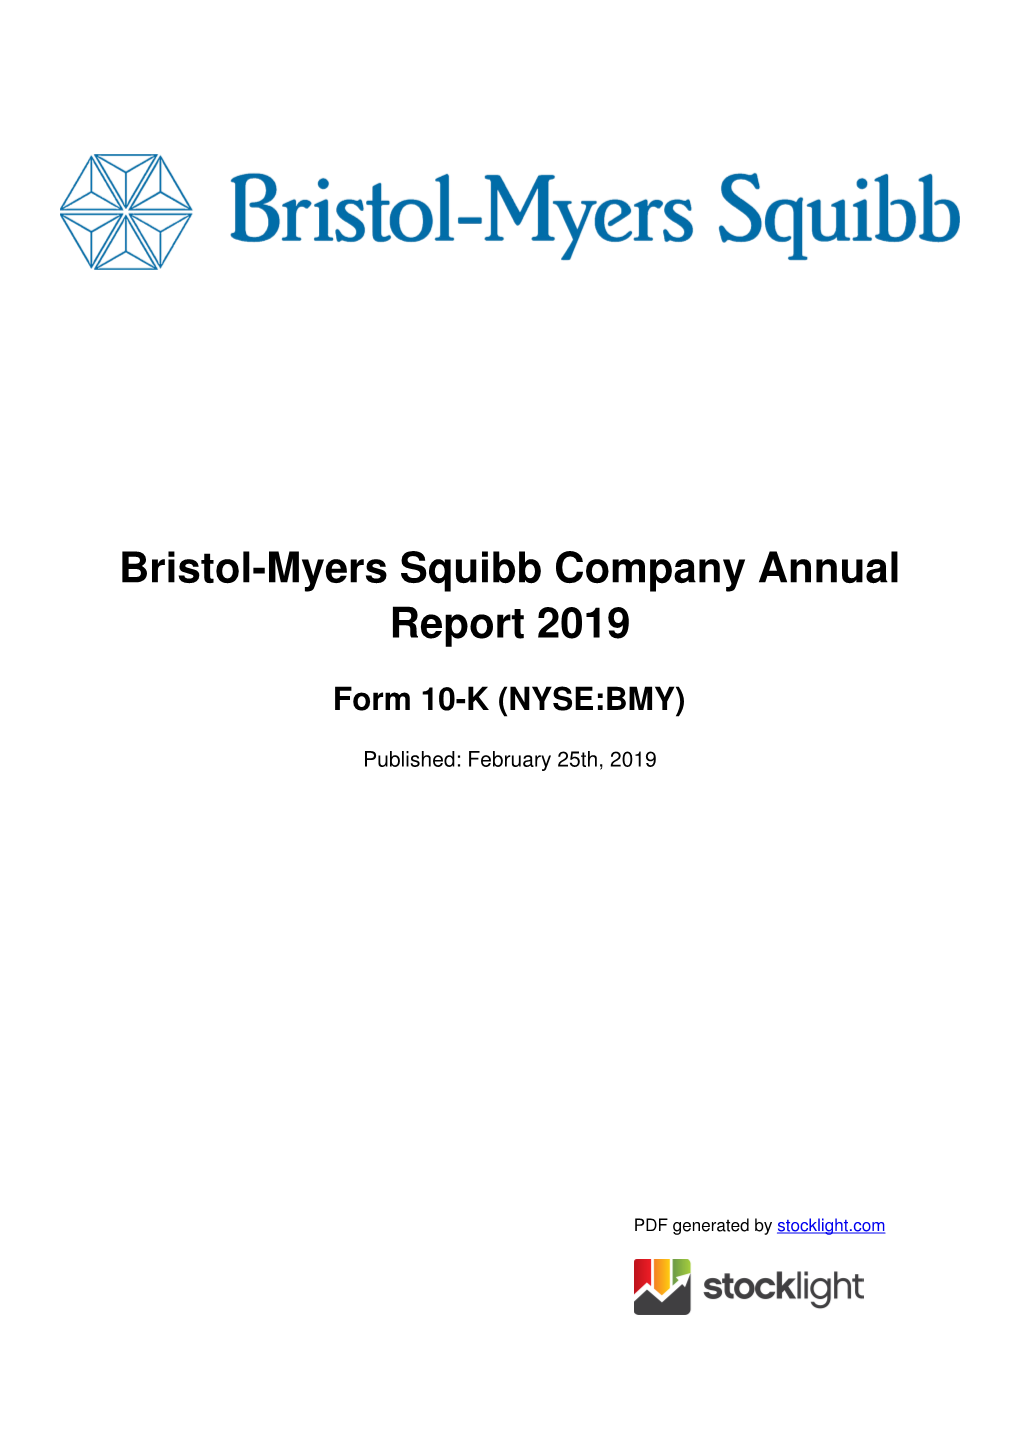 Bristol-Myers Squibb Company Annual Report 2019